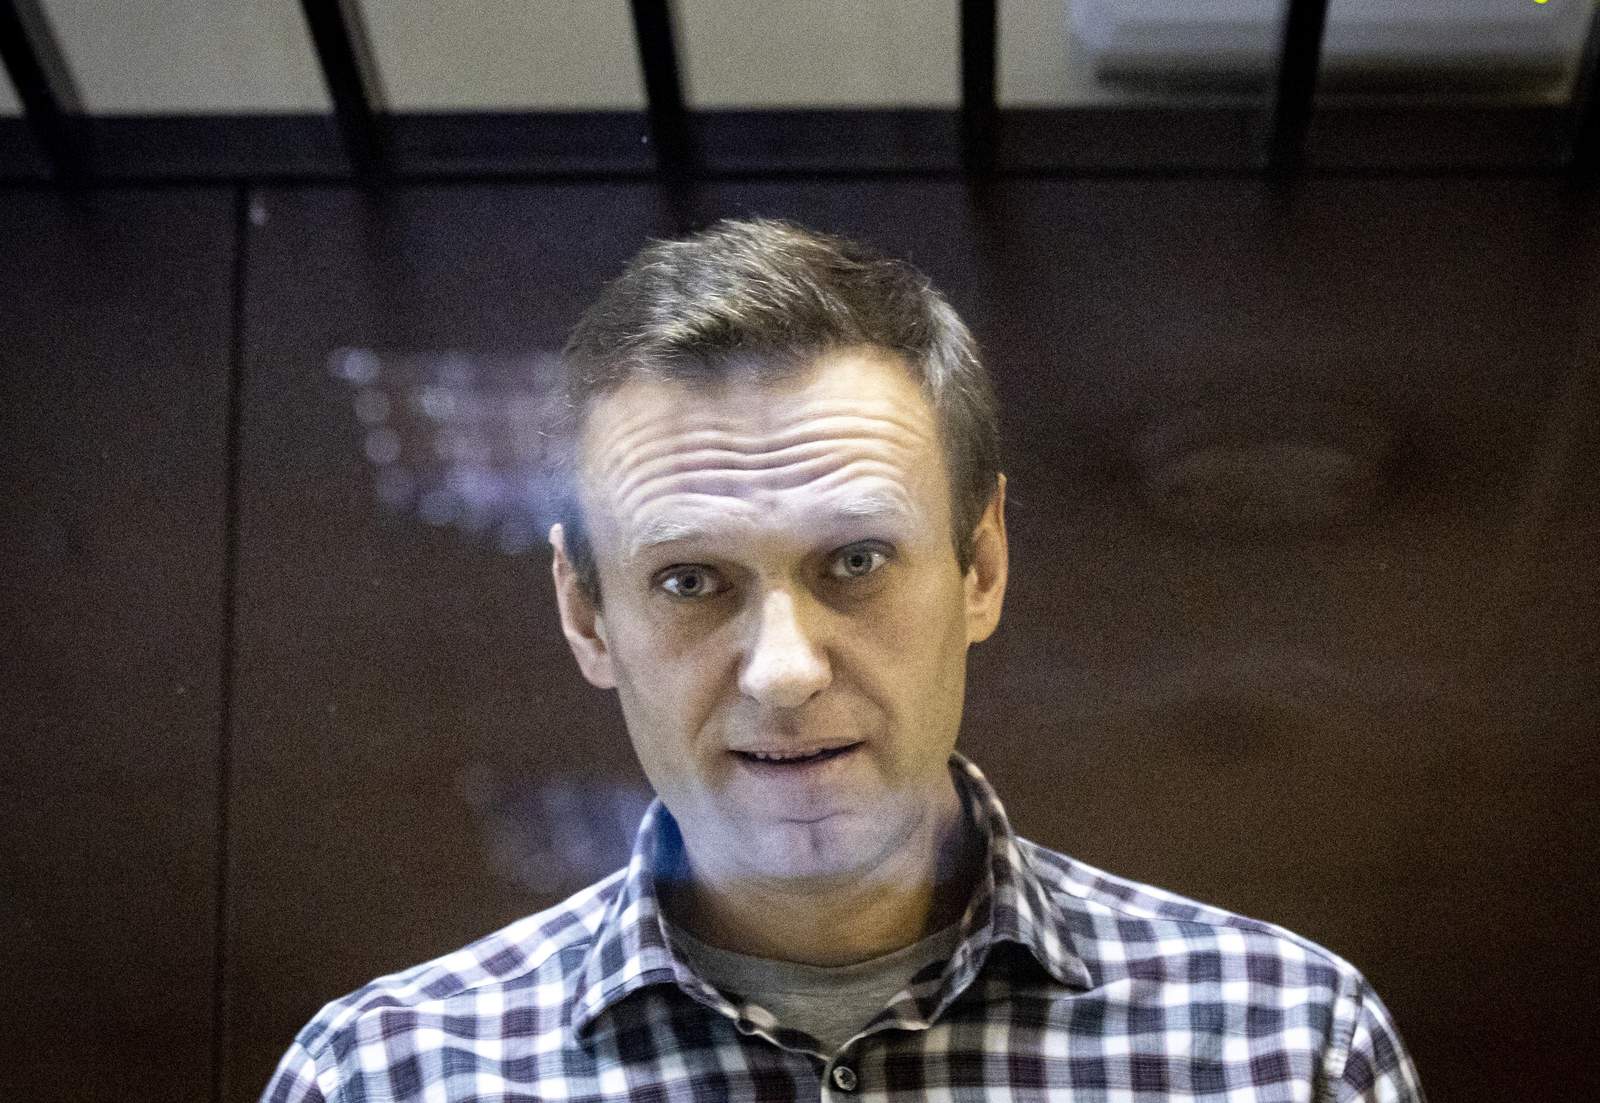 Putin critic Navalny loses weight, blames harsh prison